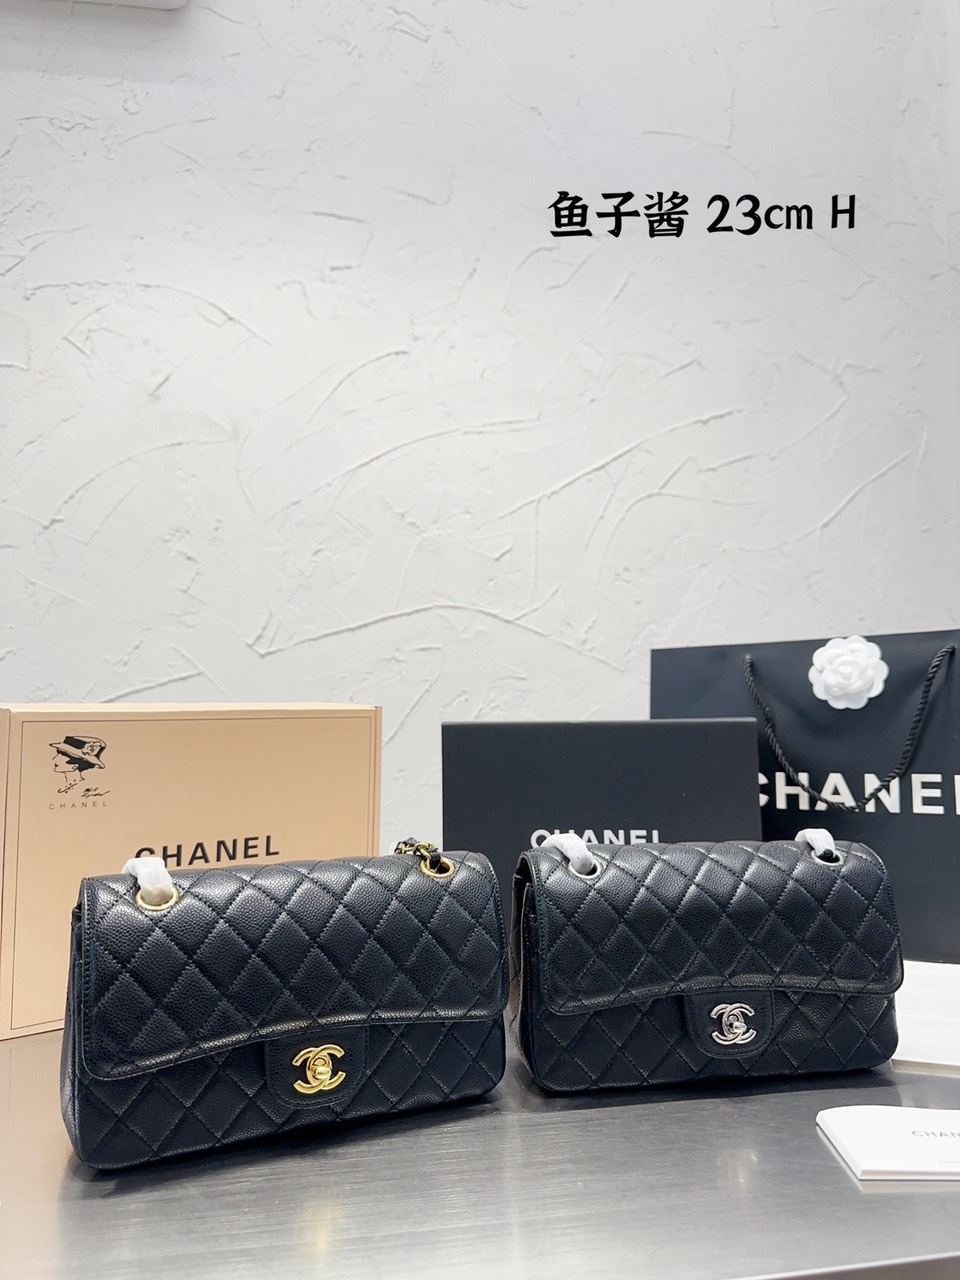 Tổng Hợp Túi Xách Chanel Classic Super Da Hạt Size 23cm